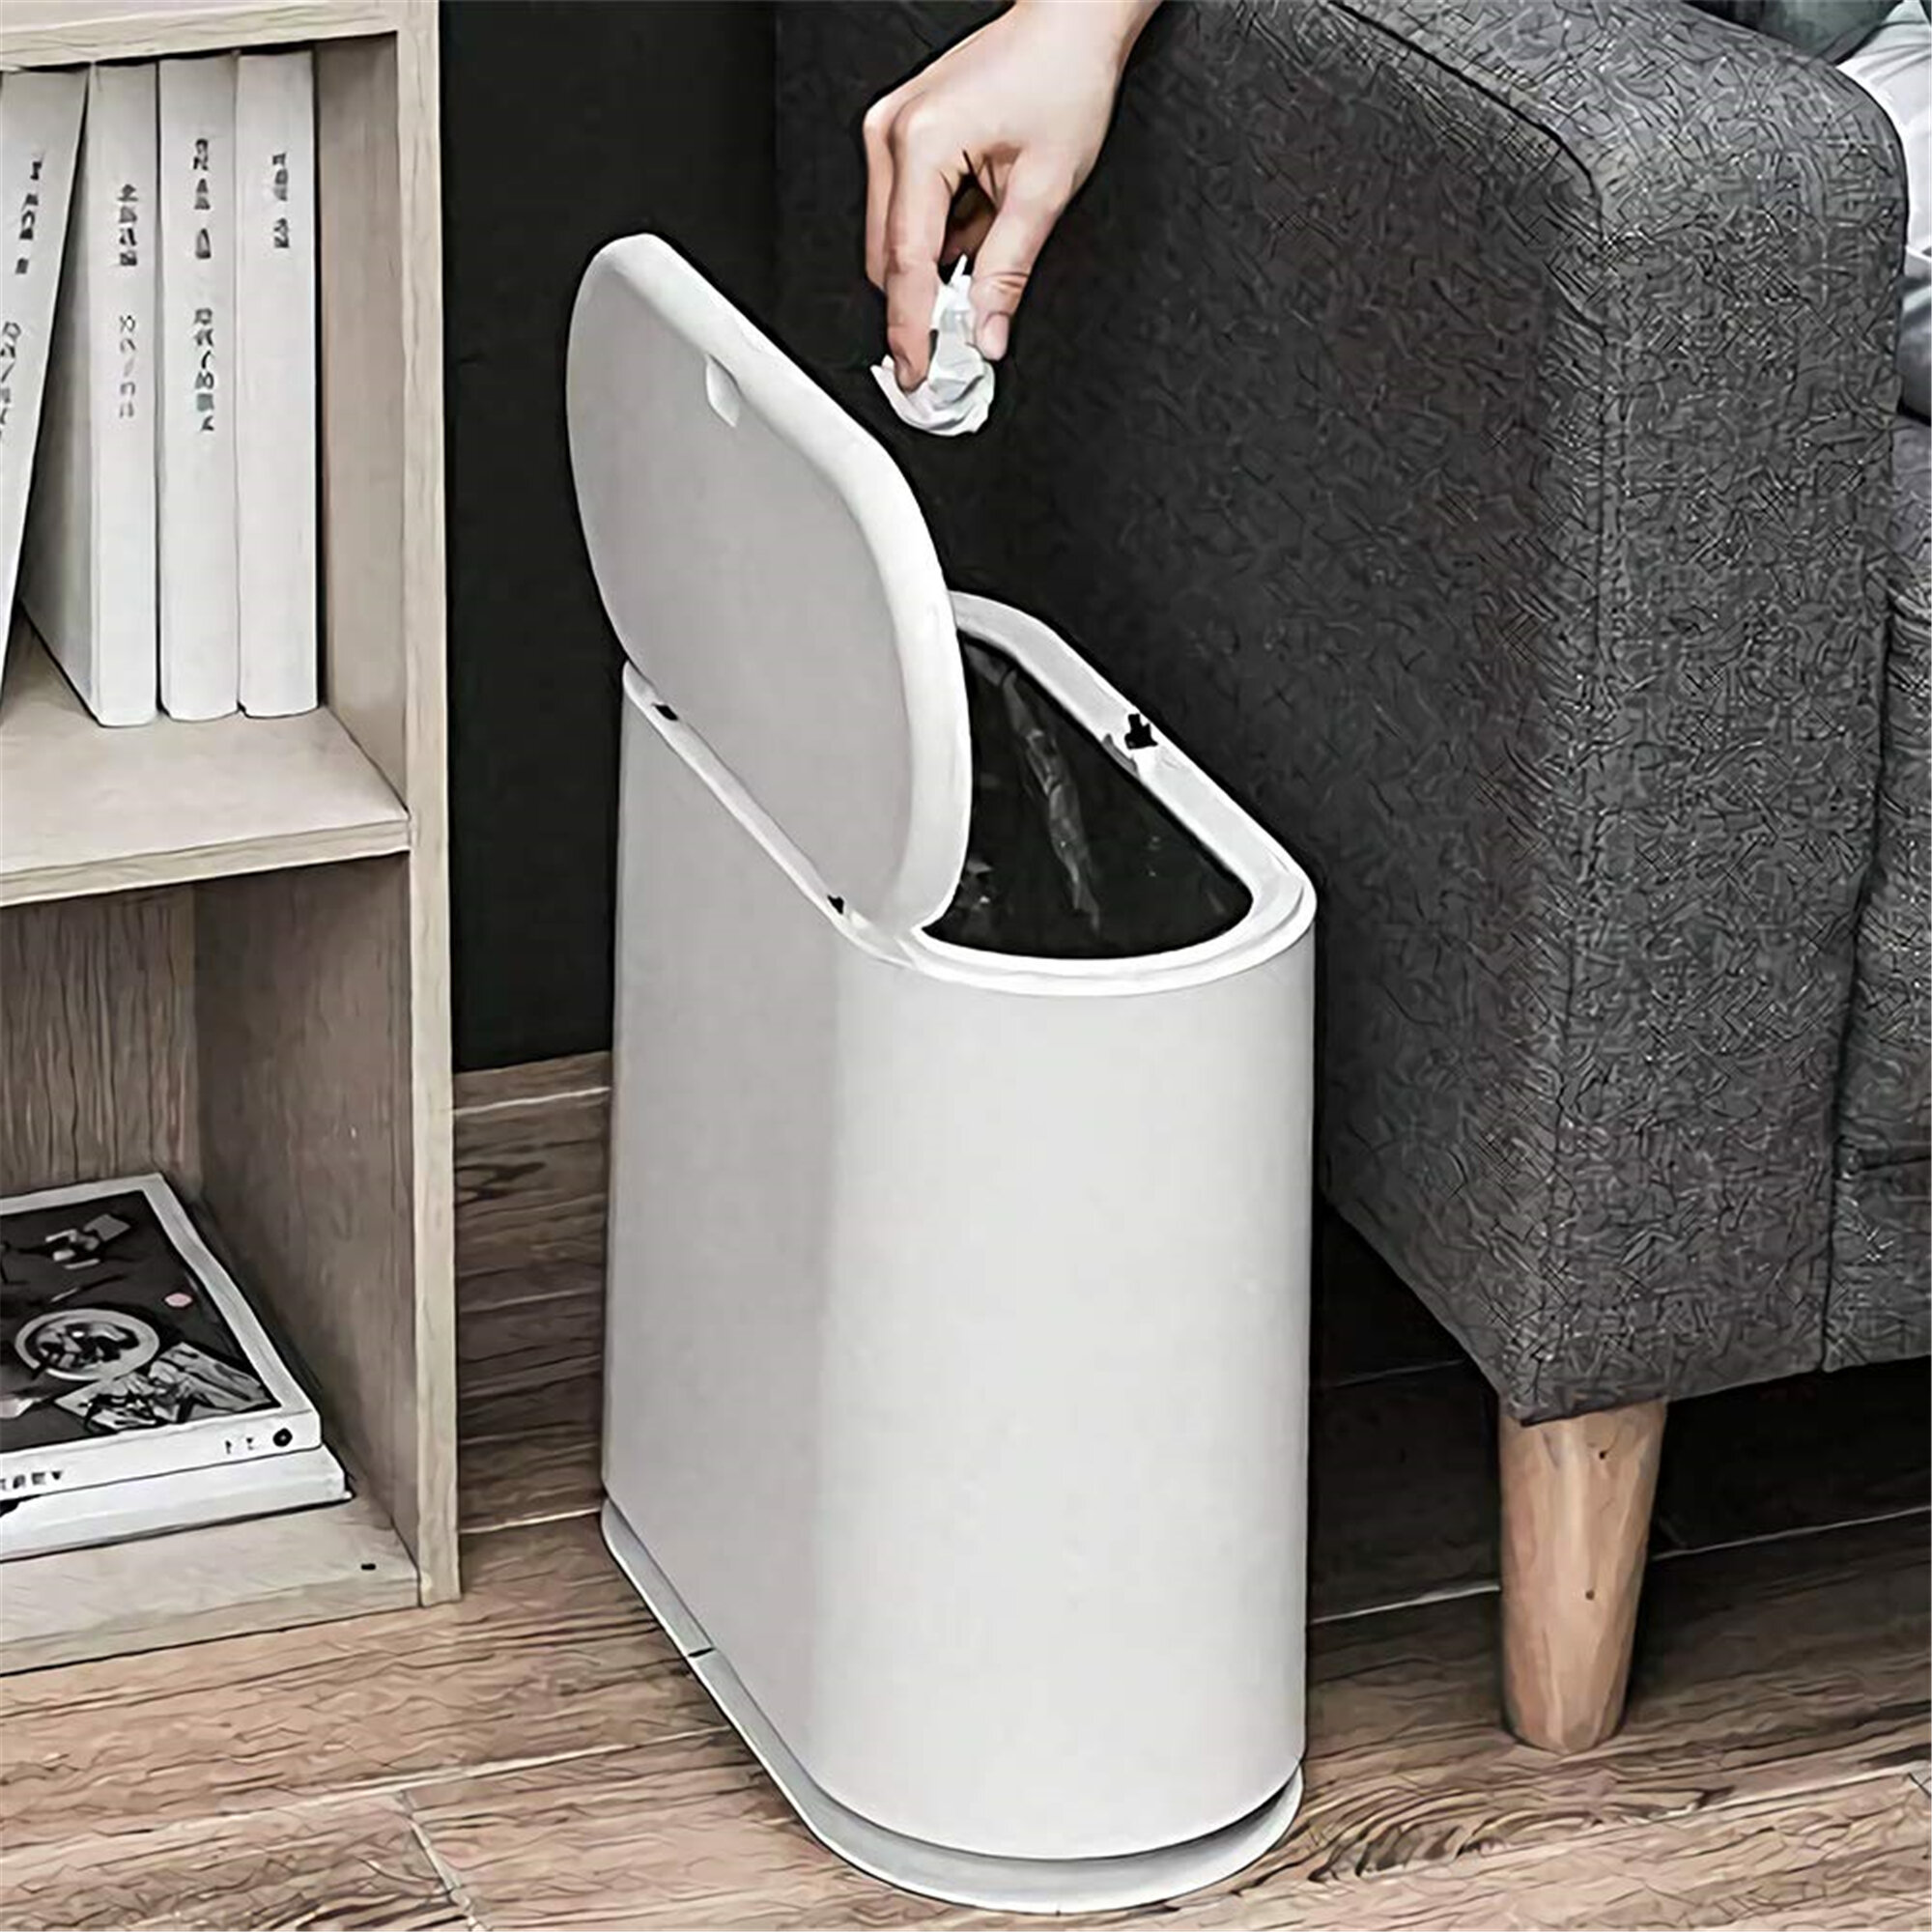 Details about   10L Plastic Trash Bin Bucket Dustbin Garbage Can for Kitchen HomeOffice Bathroom 